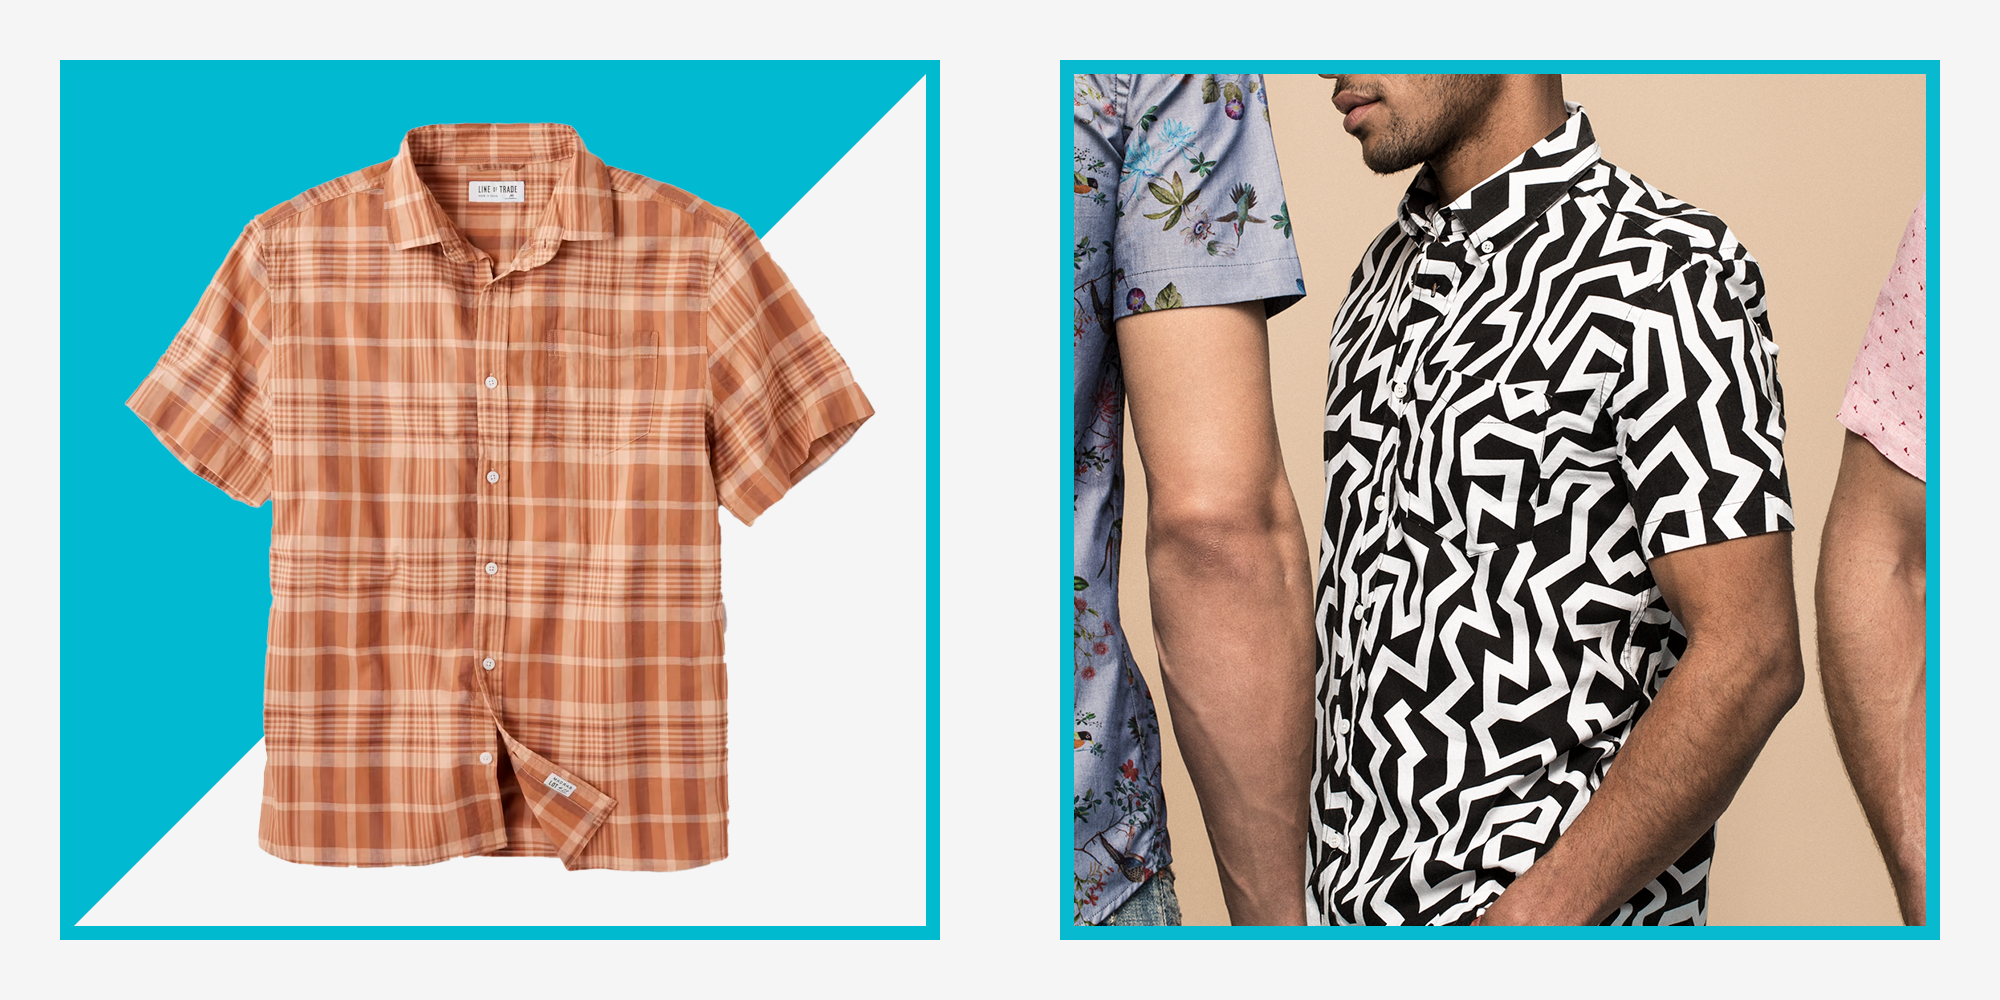 QonioiTshirts for Men Short Sleeve Shirt Men Summer Casual Fashion